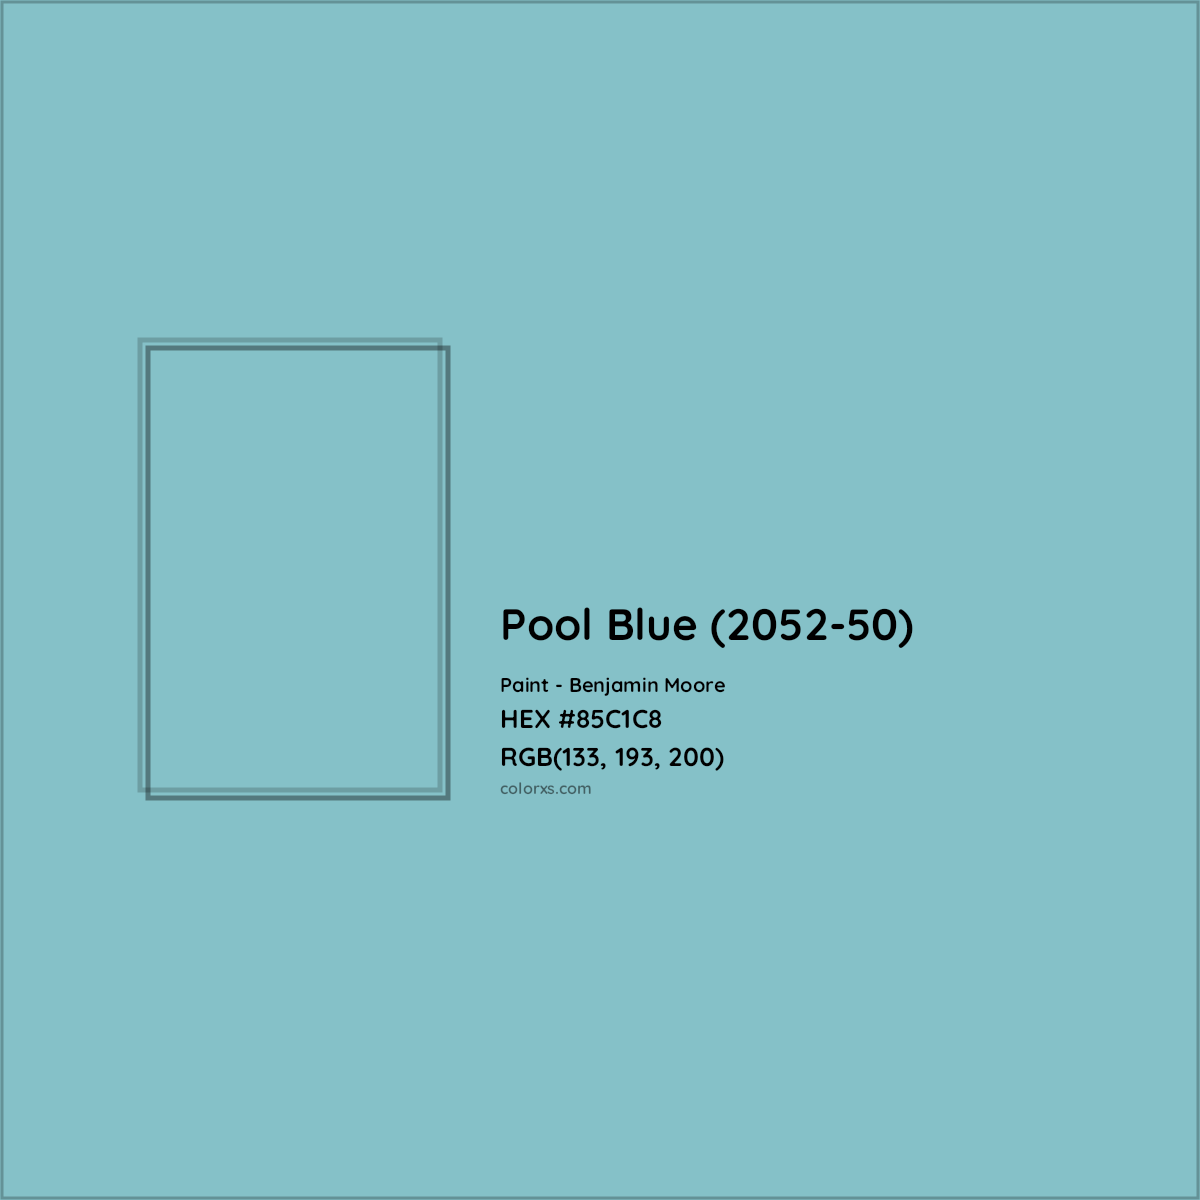 HEX #85C1C8 Pool Blue (2052-50) Paint Benjamin Moore - Color Code